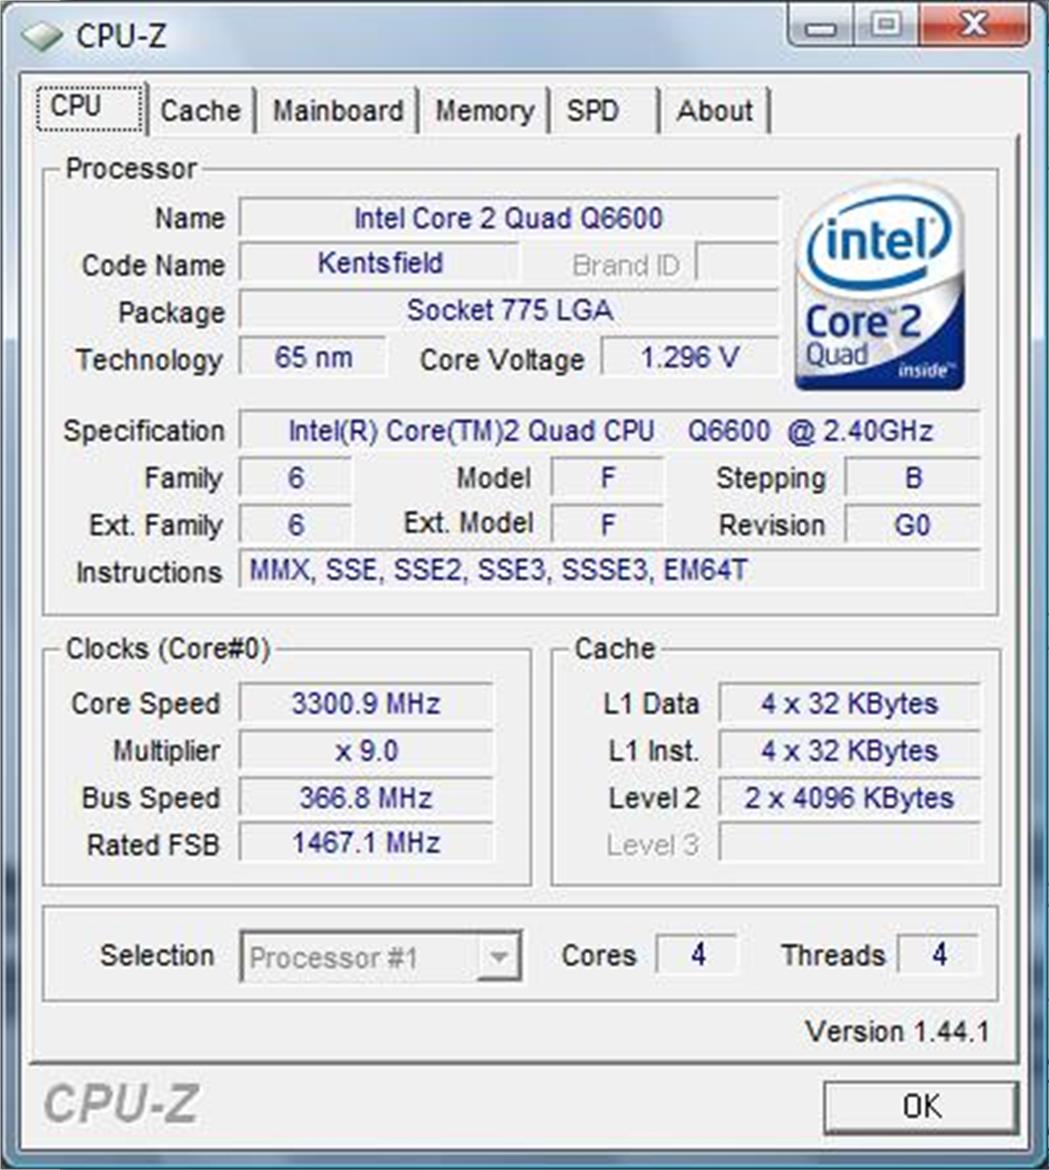 Dell XPS 630 Gaming Desktop System